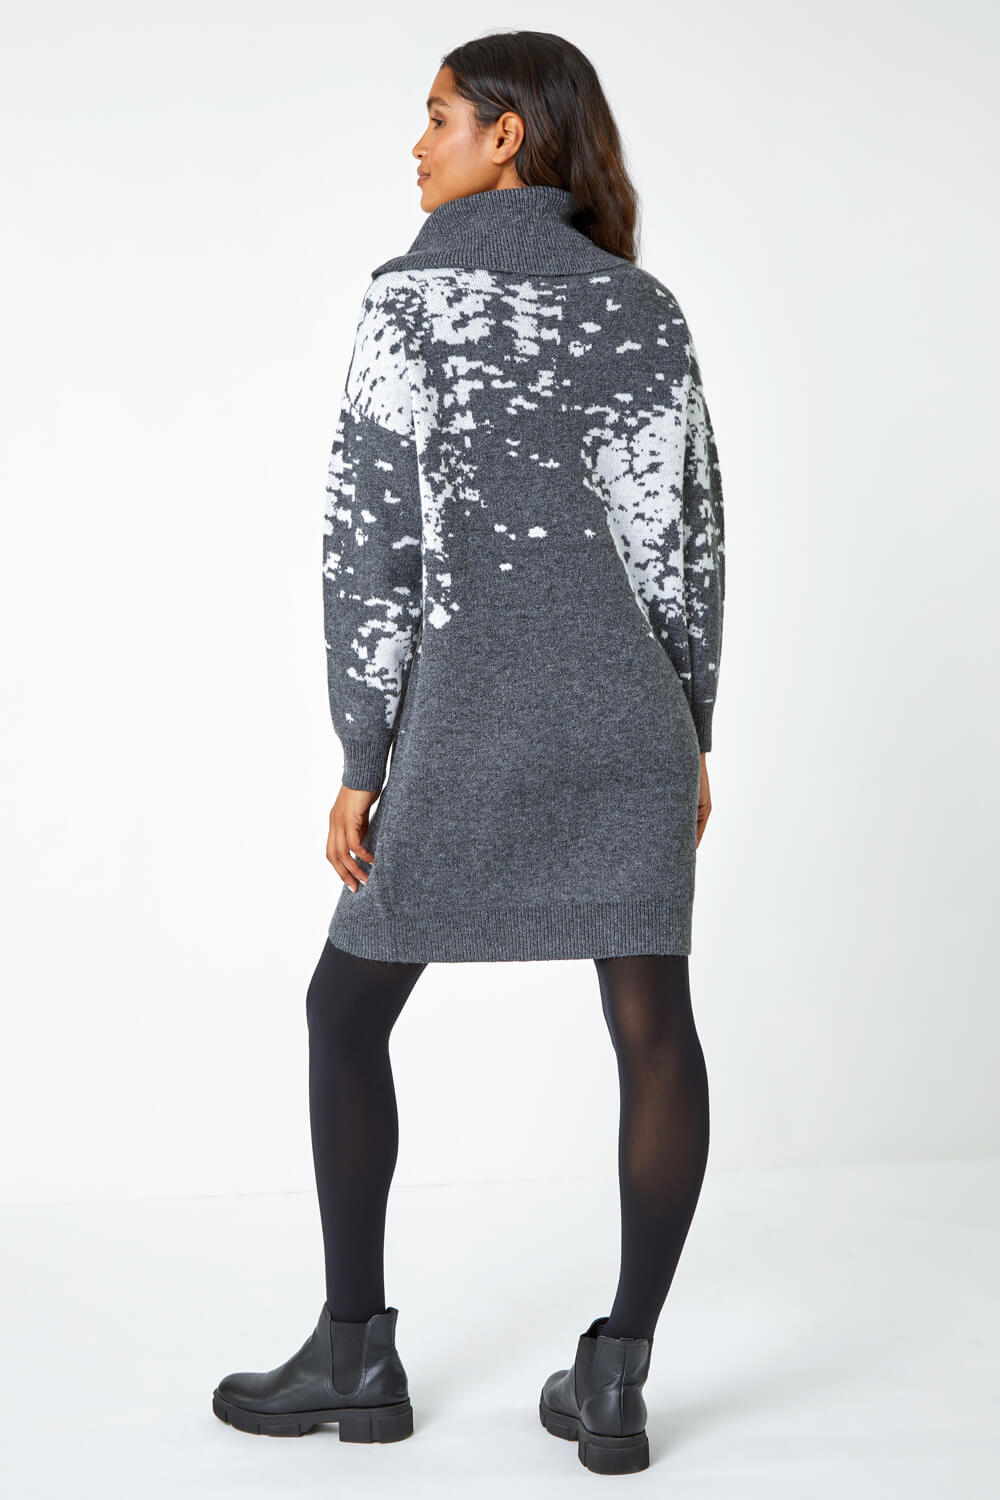 Dark Grey Abstract Print Cowl Neck Jumper Dress, Image 4 of 5